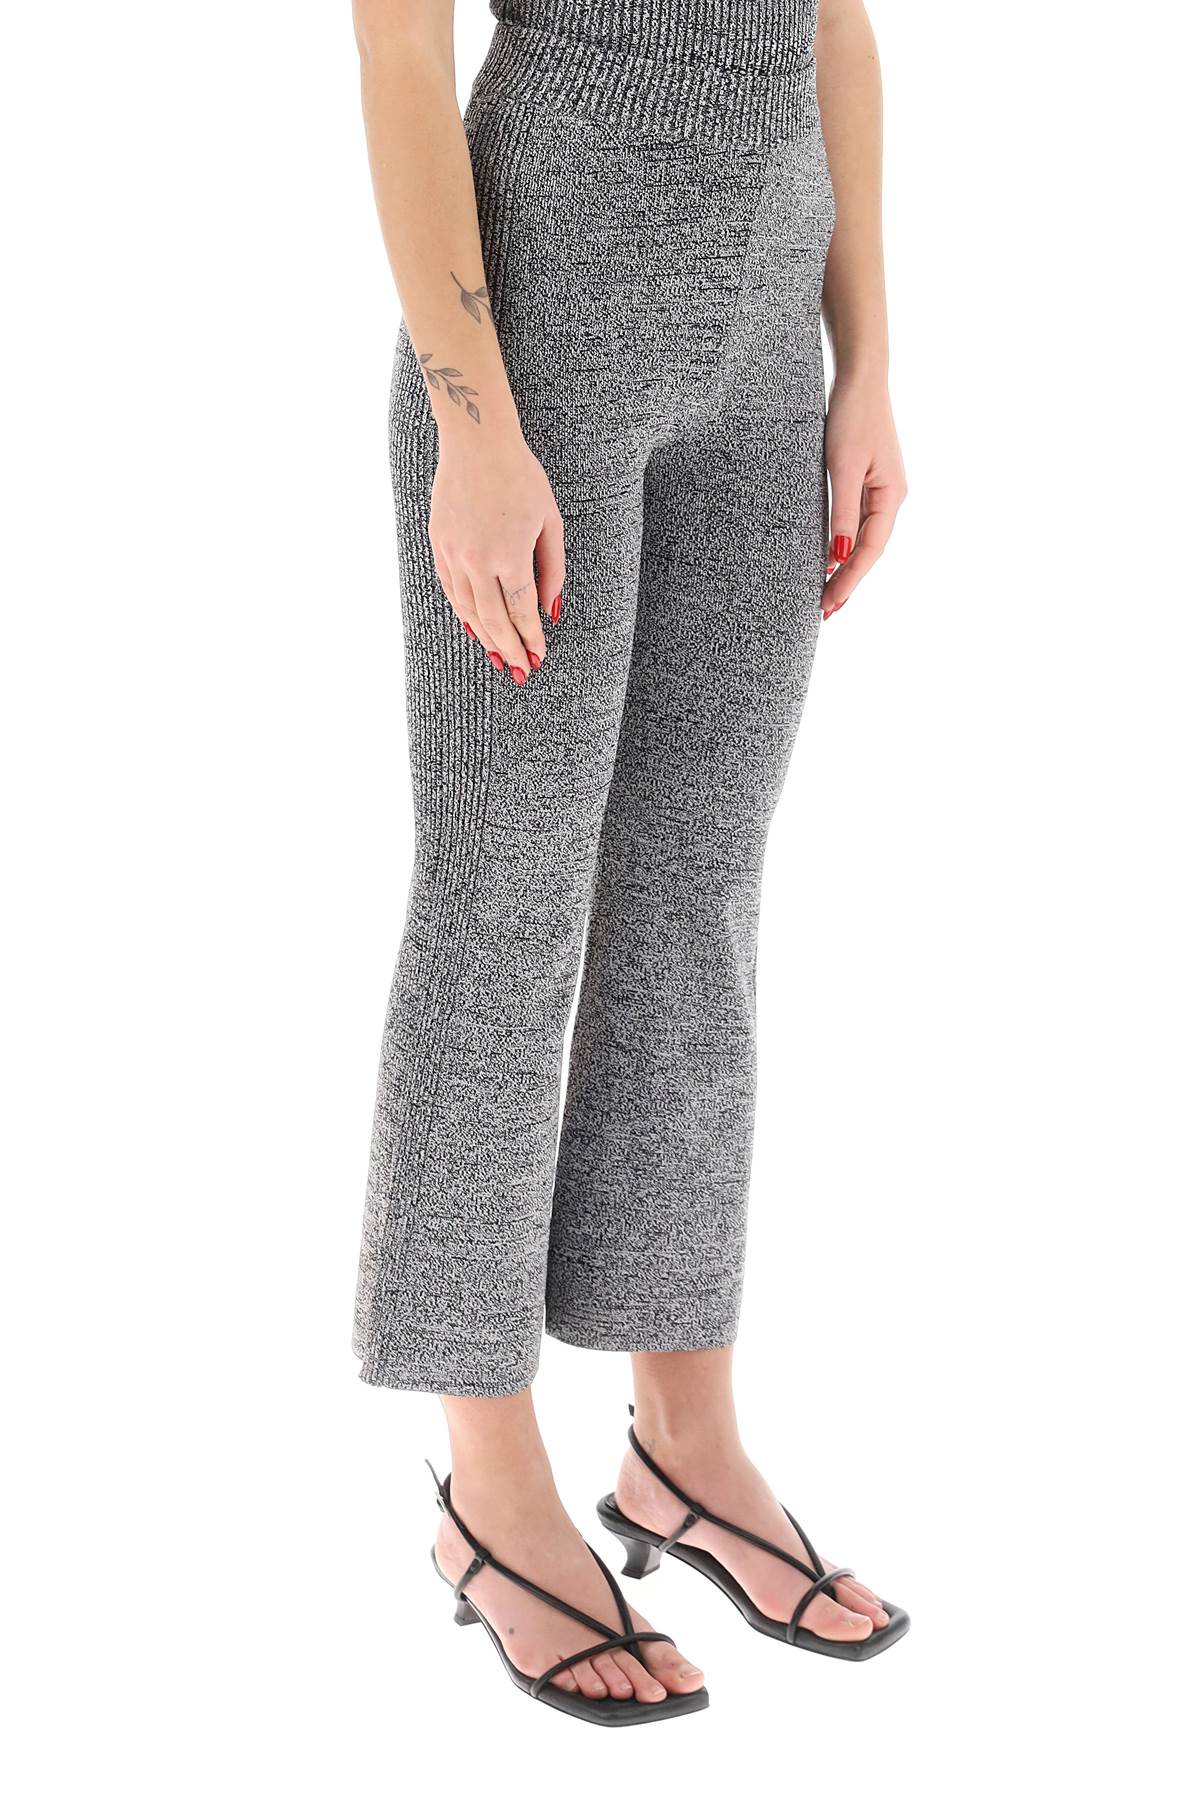 Ganni stretch knit cropped pants-1